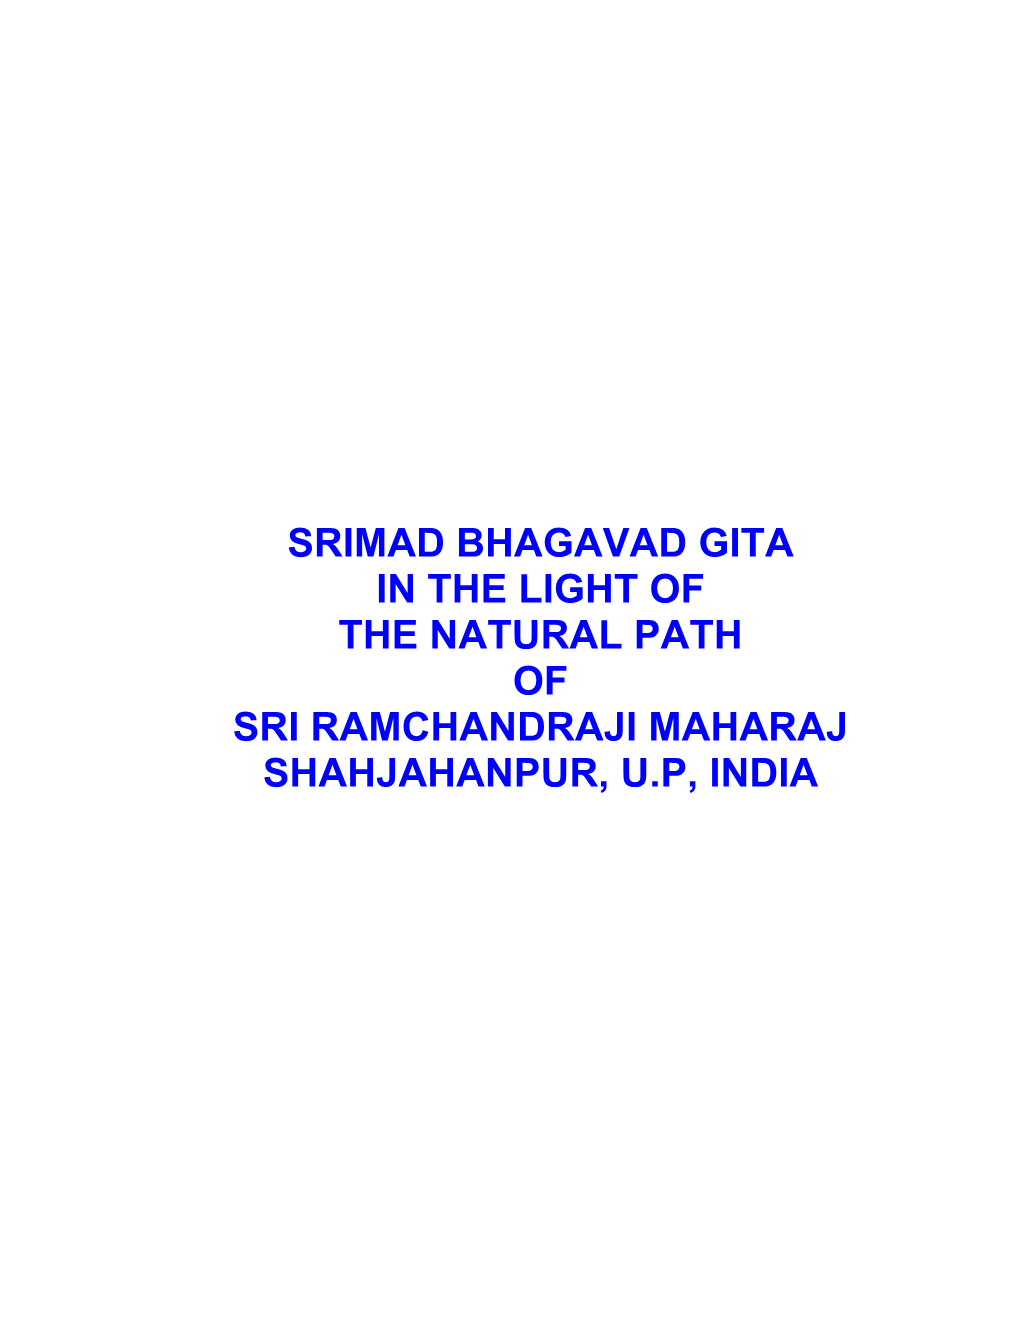 Srimad Bhagavad Gita in the Light of the Natural Path of Sri Ramchandraji Maharaj Shahjahanpur, U.P, India